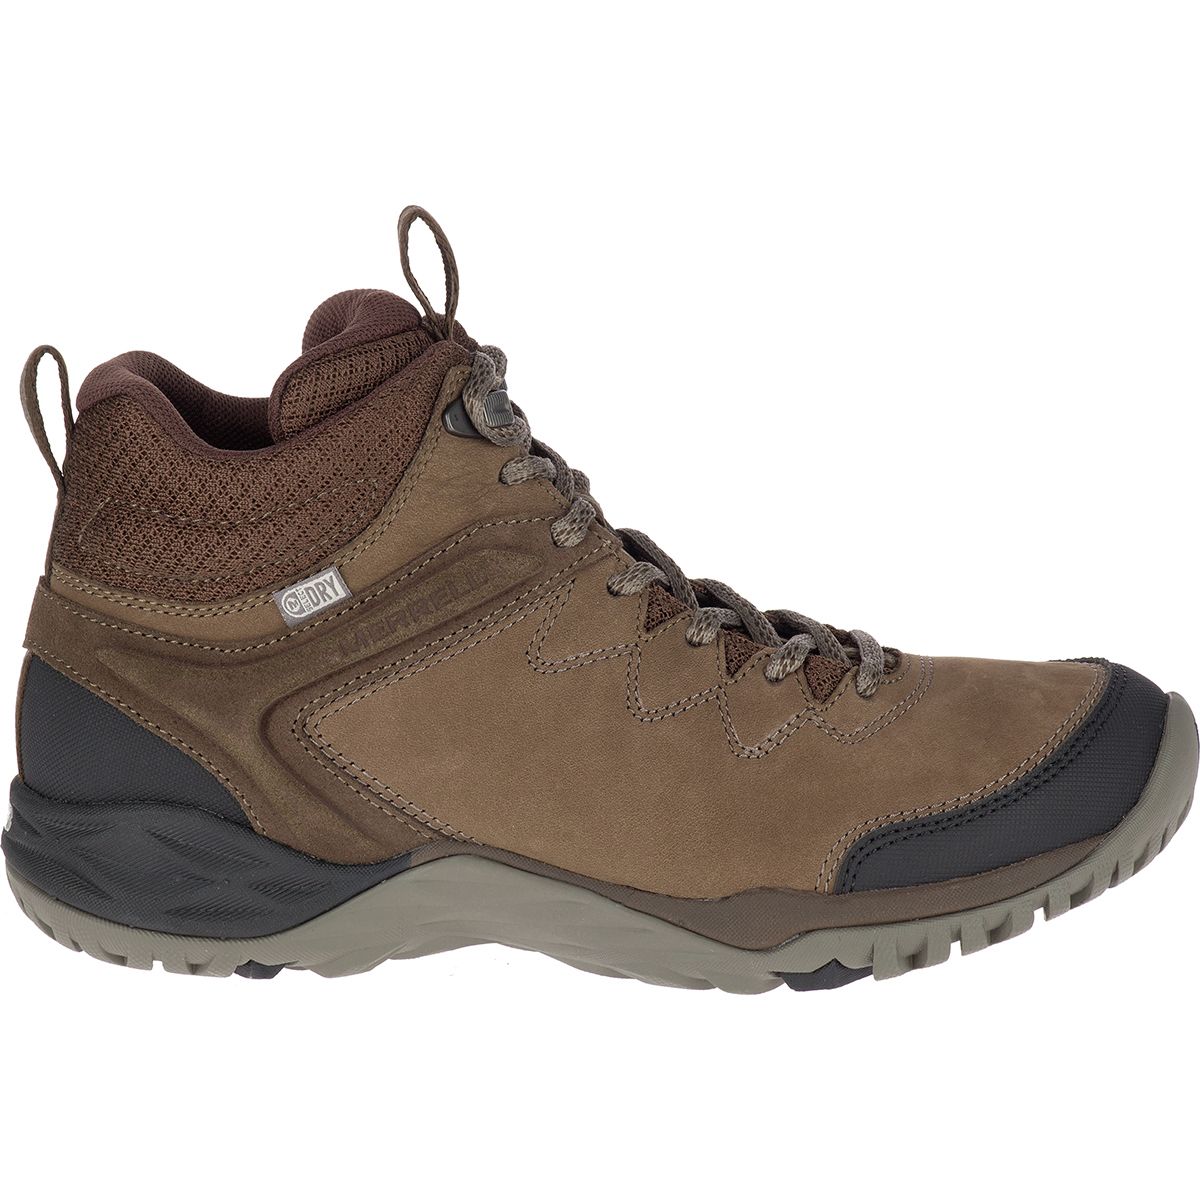 Merrell Siren Traveller Q2 Mid Waterproof Hiking Boot - Women's - Footwear